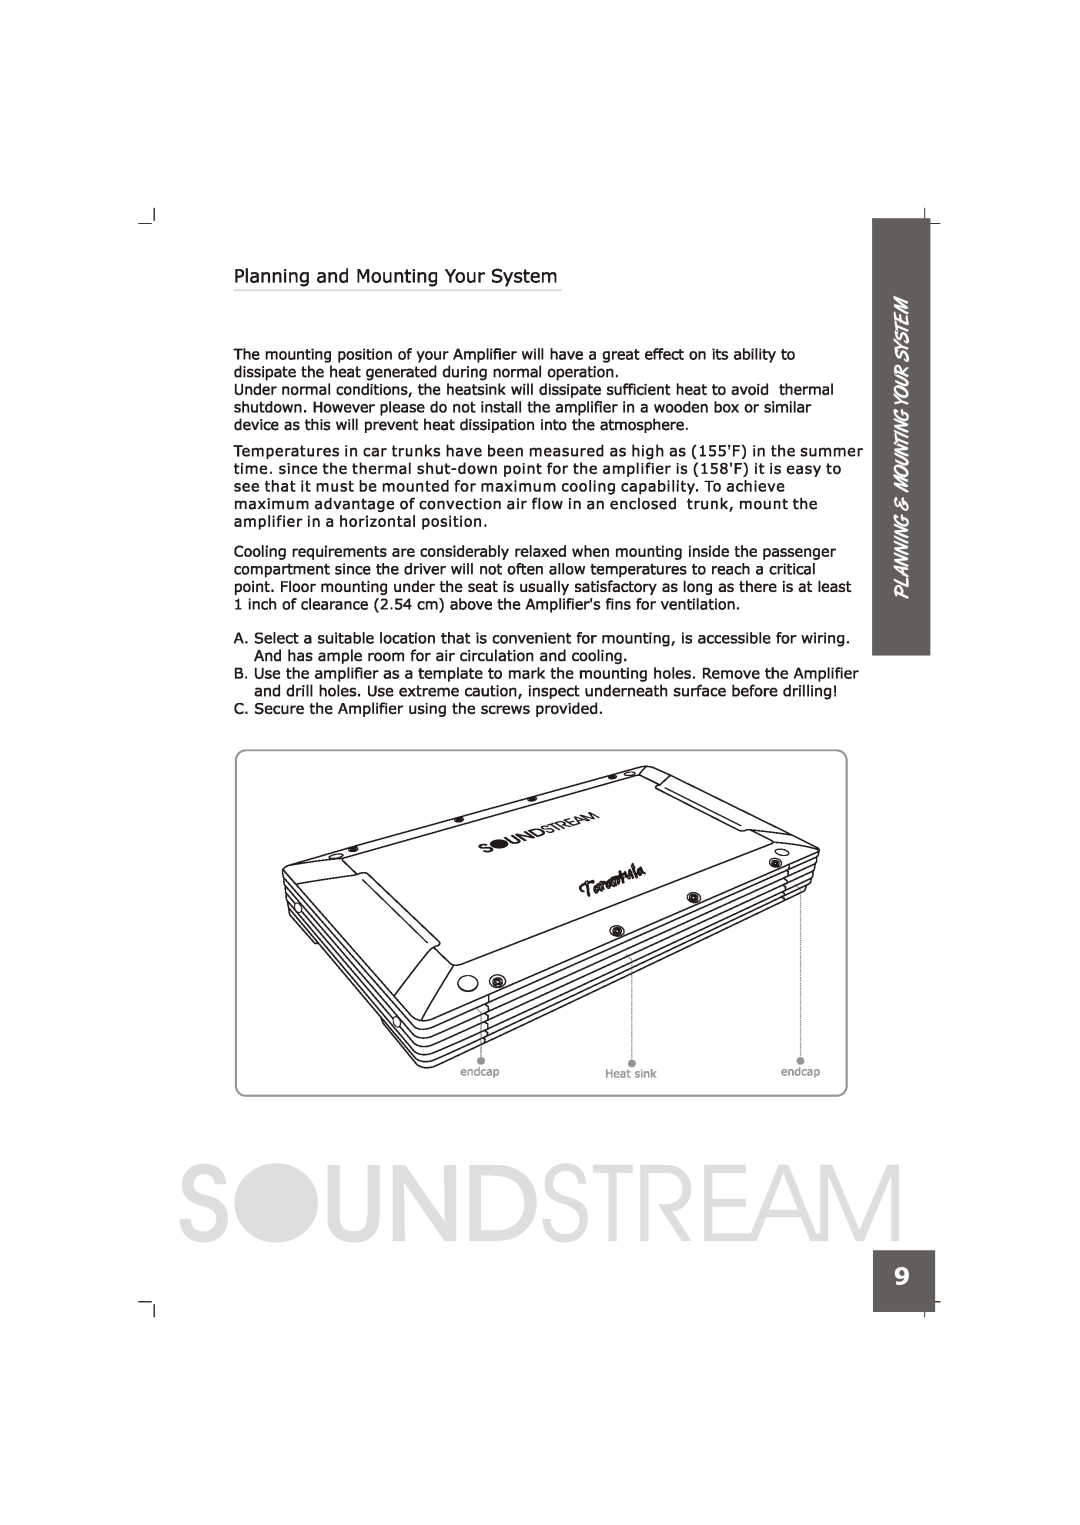 Soundstream Technologies TRX15000, TRX7000, TRX10000, TRX20000 manual 